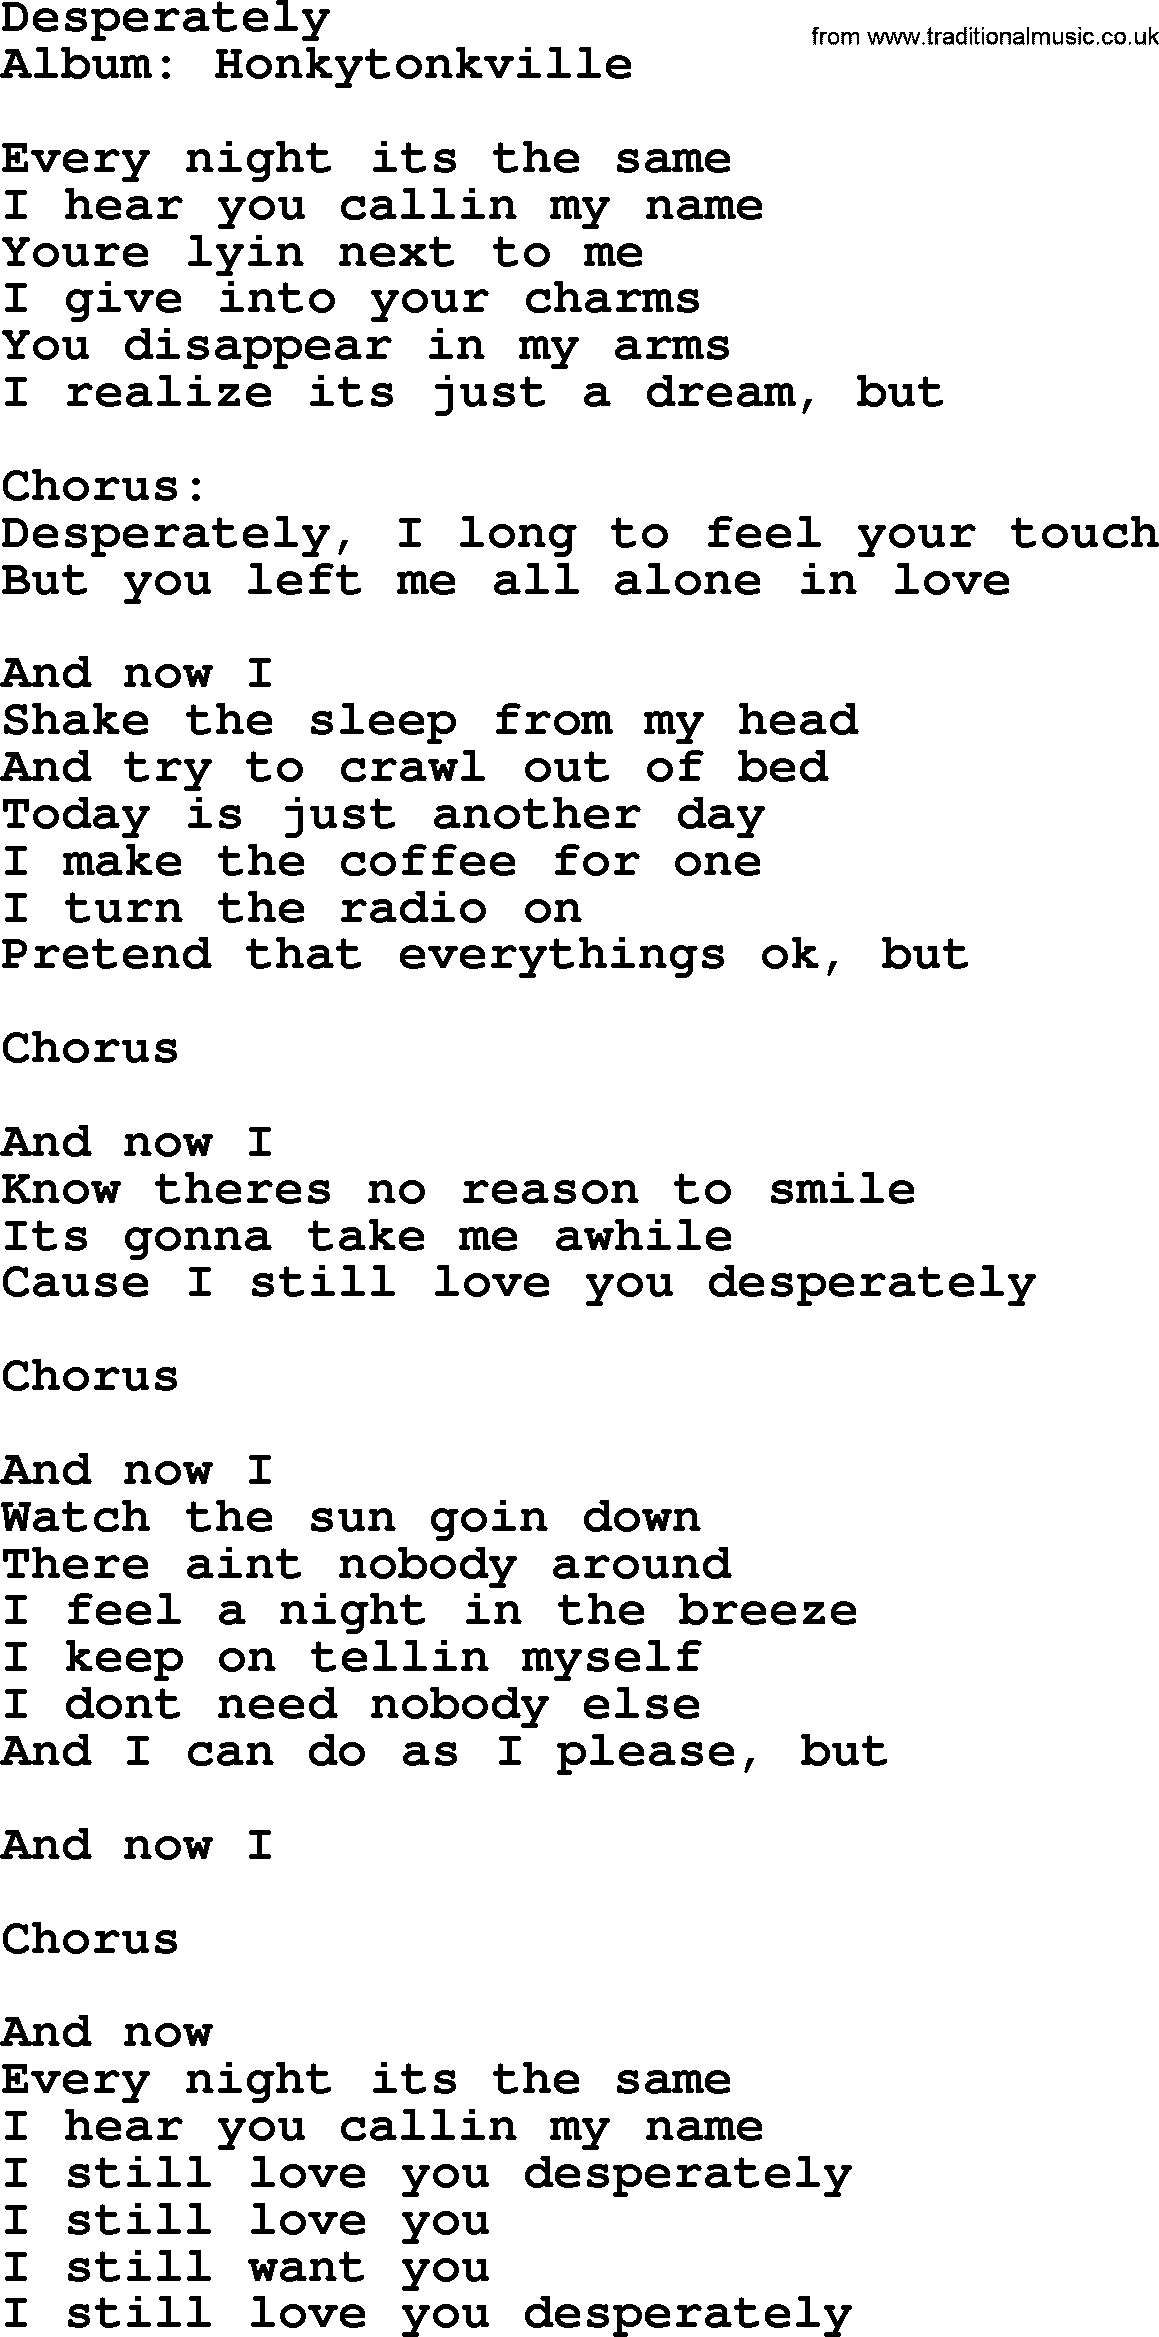 George Strait song: Desperately, lyrics